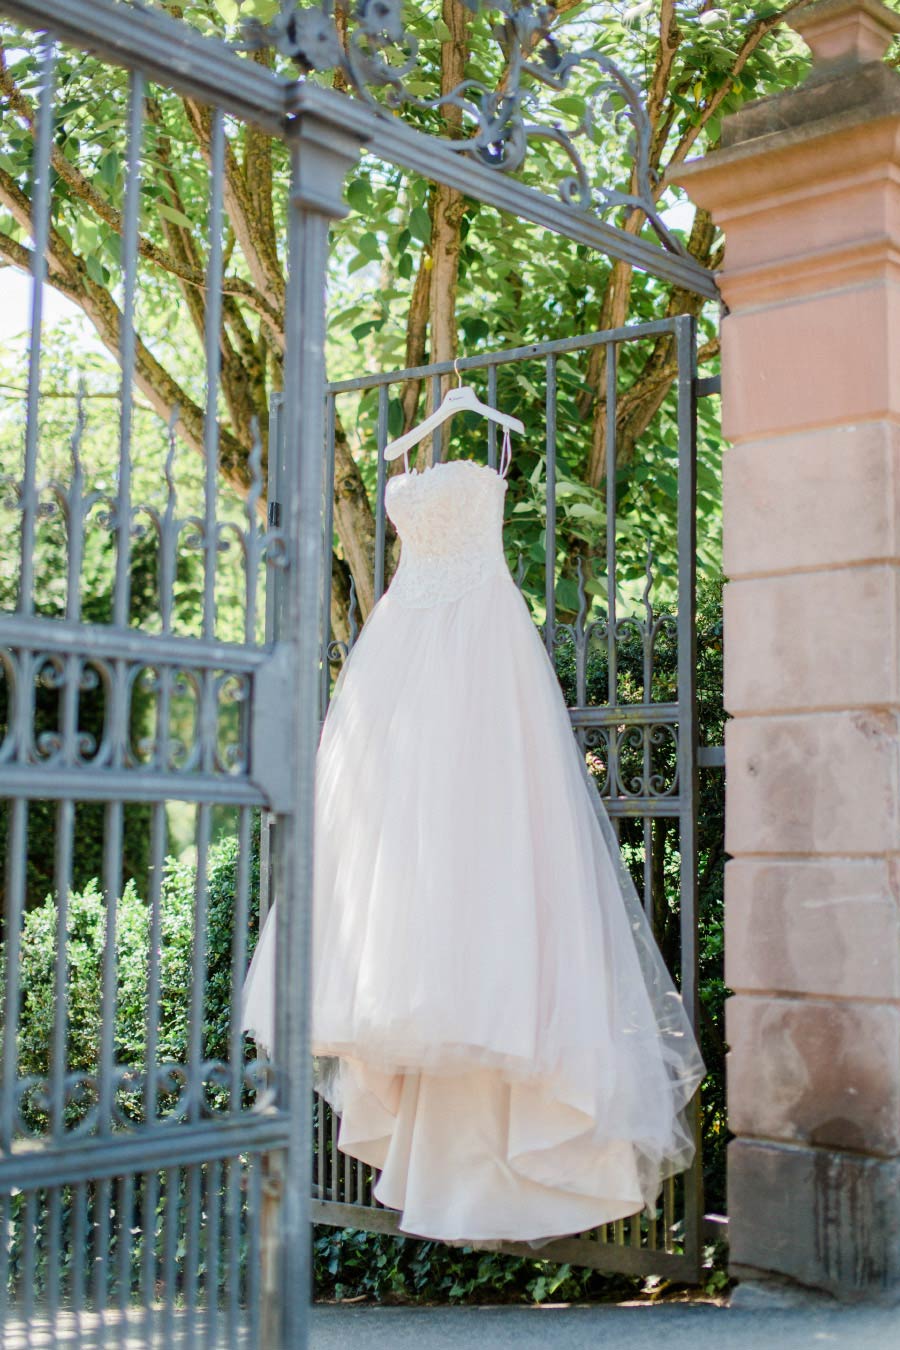 Brautkleid hängt am Kleiderbügel